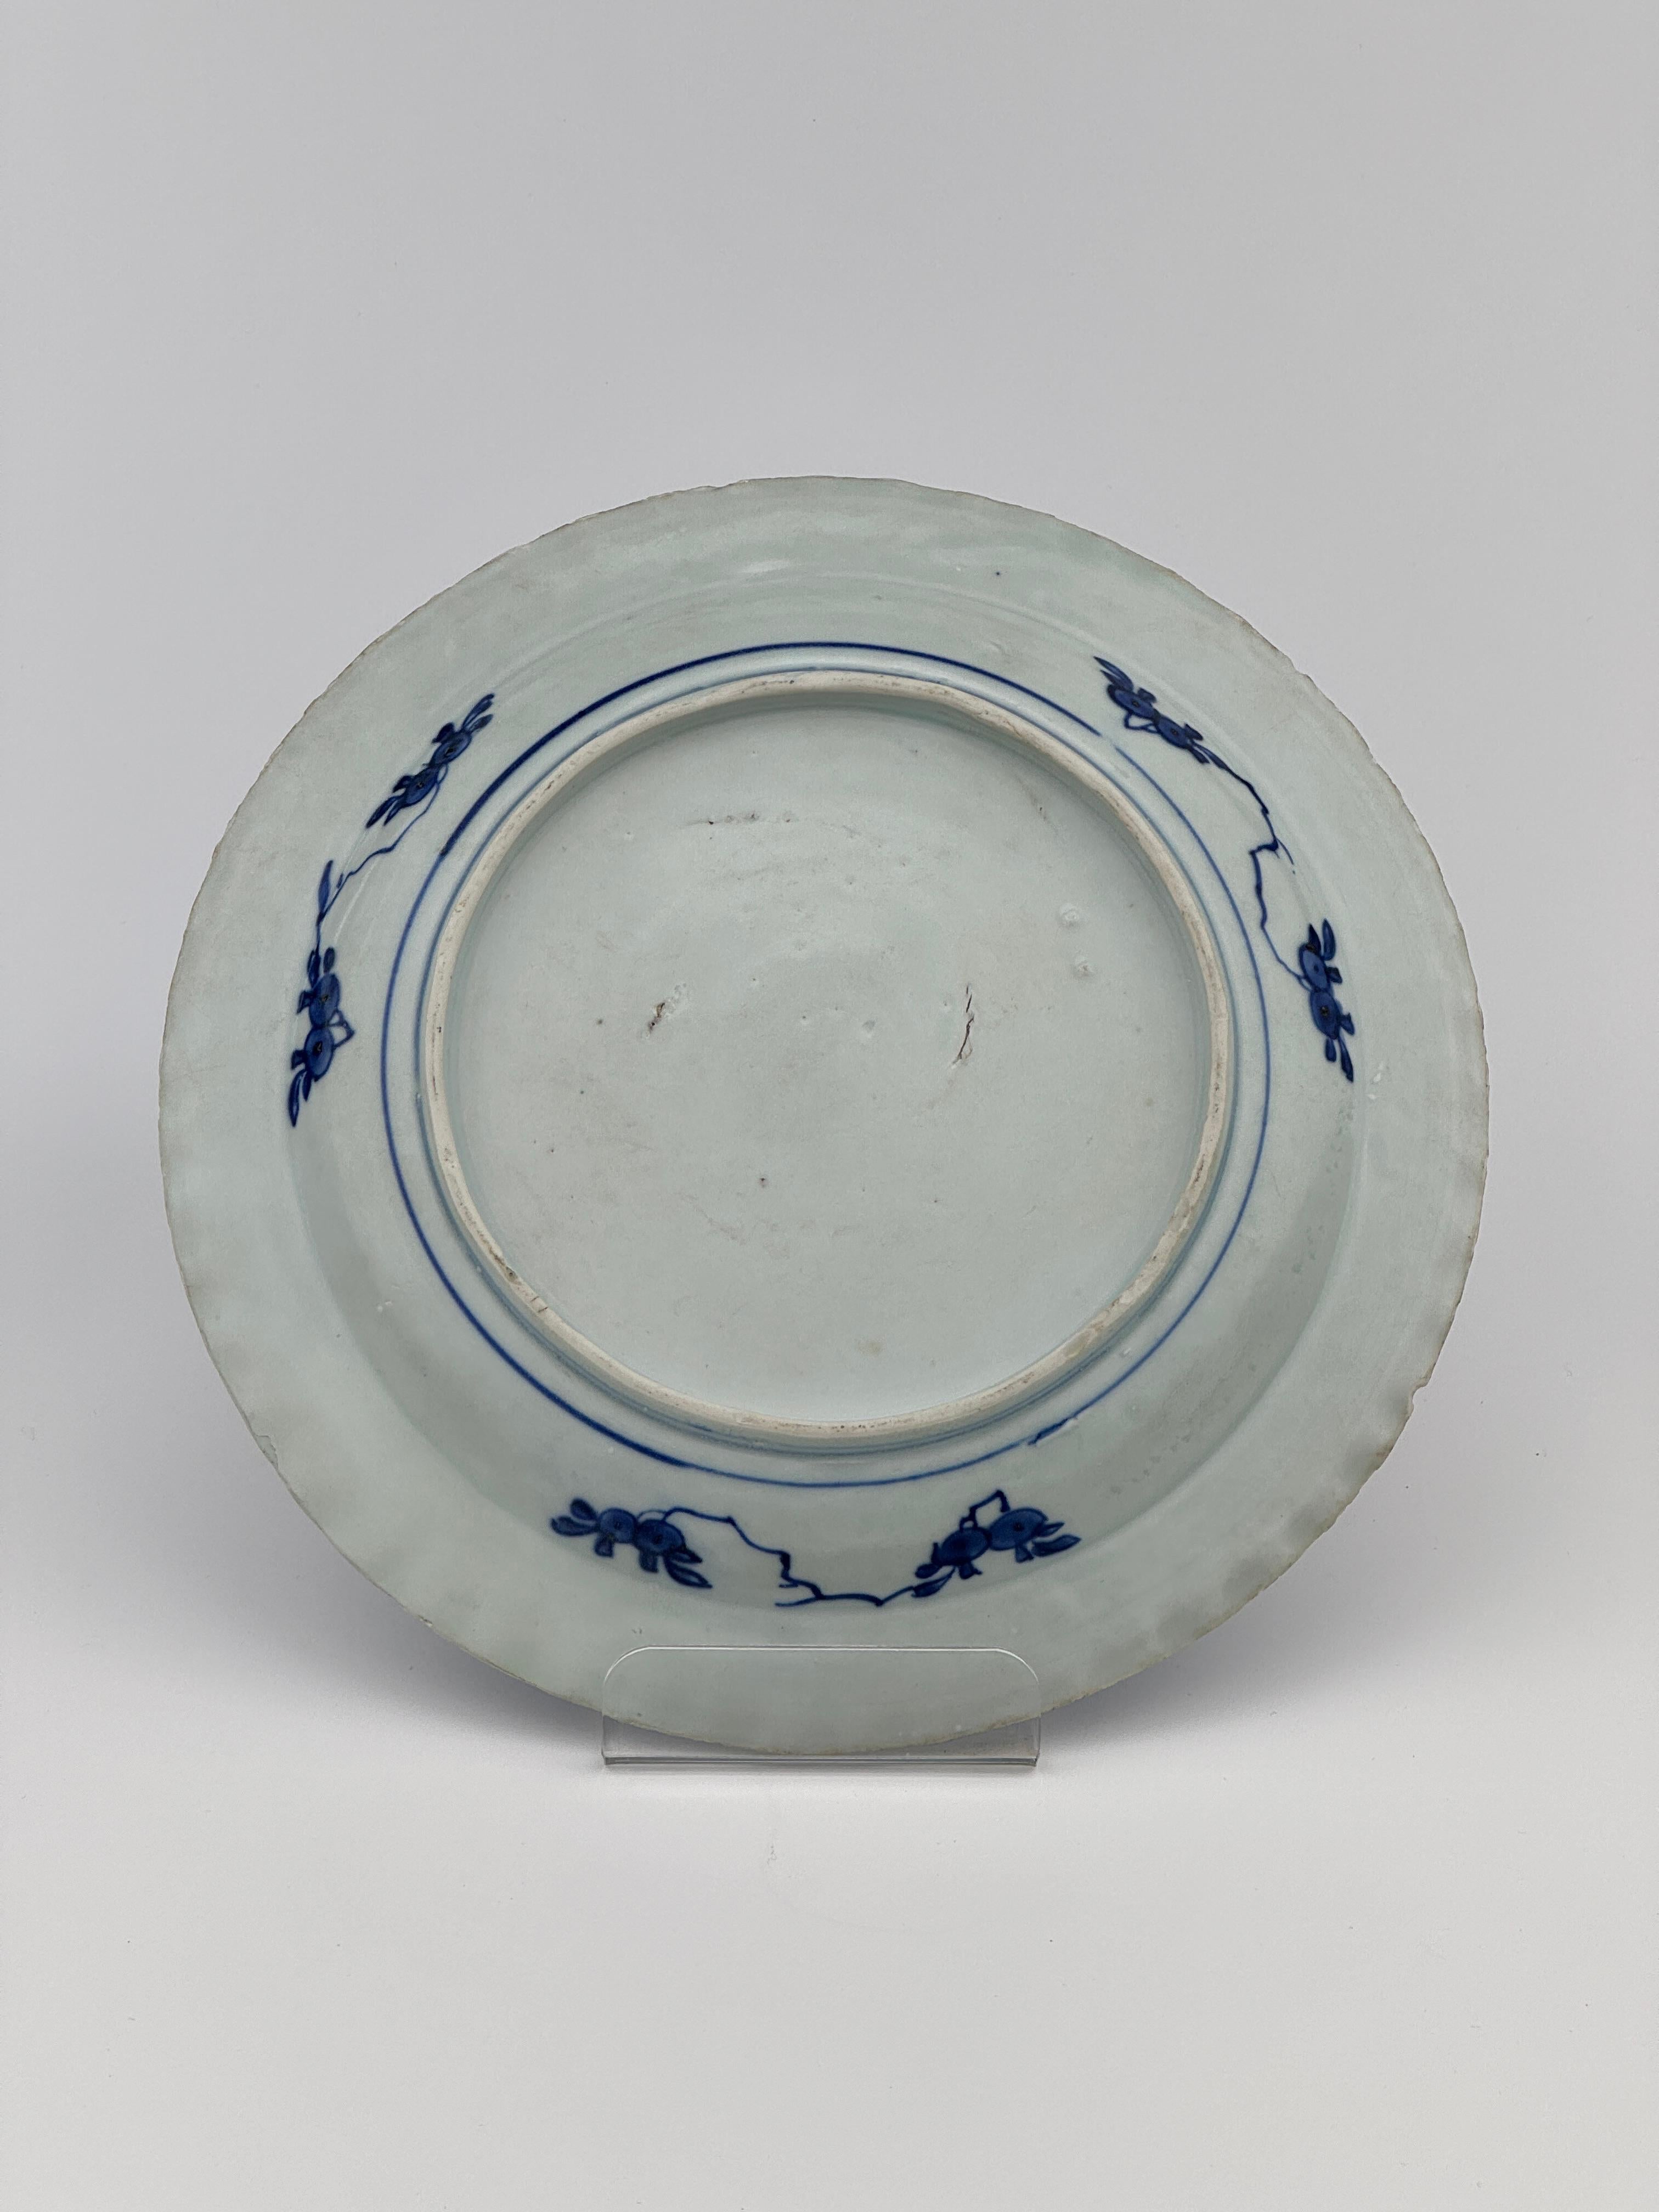  'Deshima Island' Pattern Blue and White dish c1725, Qing Dynasty, Yongzheng Era For Sale 5